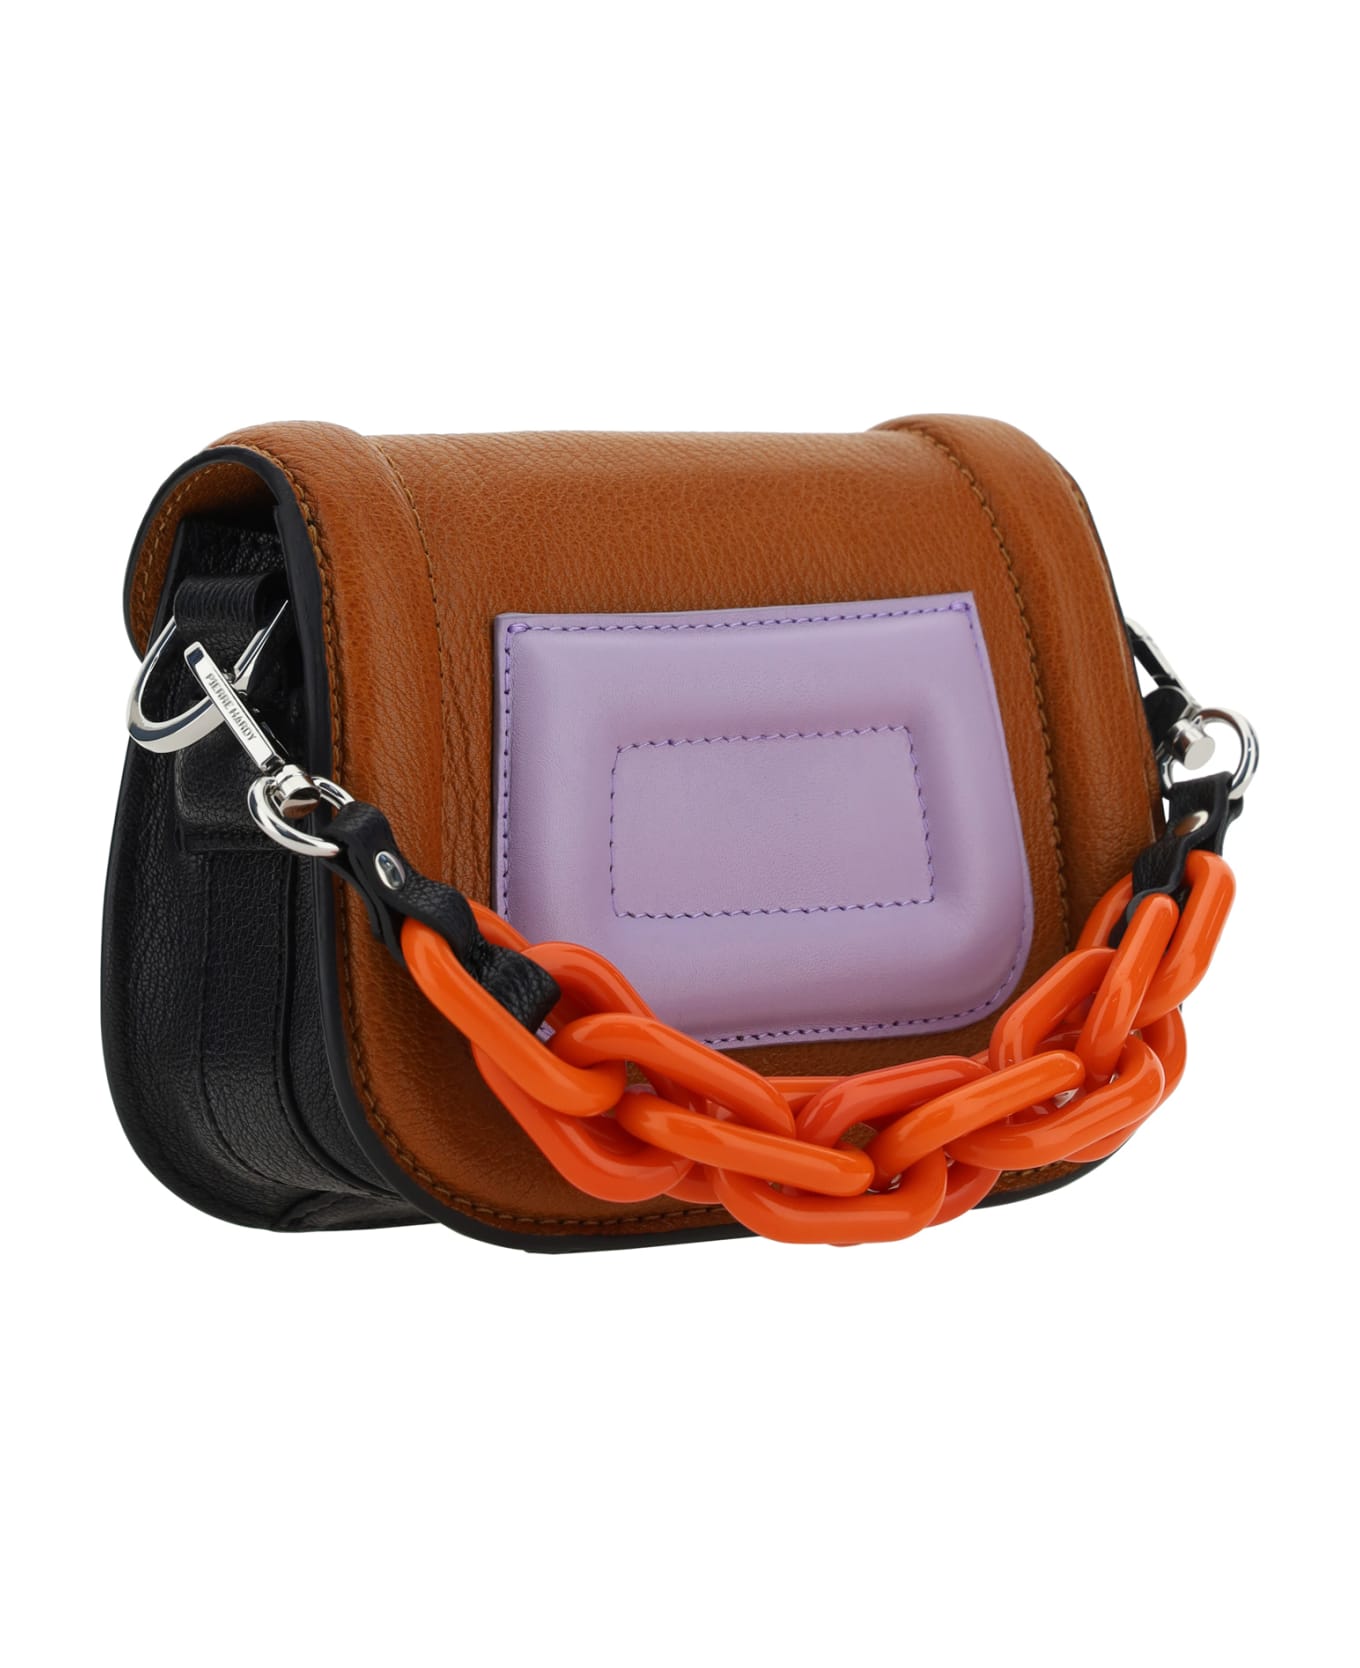 Pierre Hardy Alphaville Handbag - Tan/orange トートバッグ